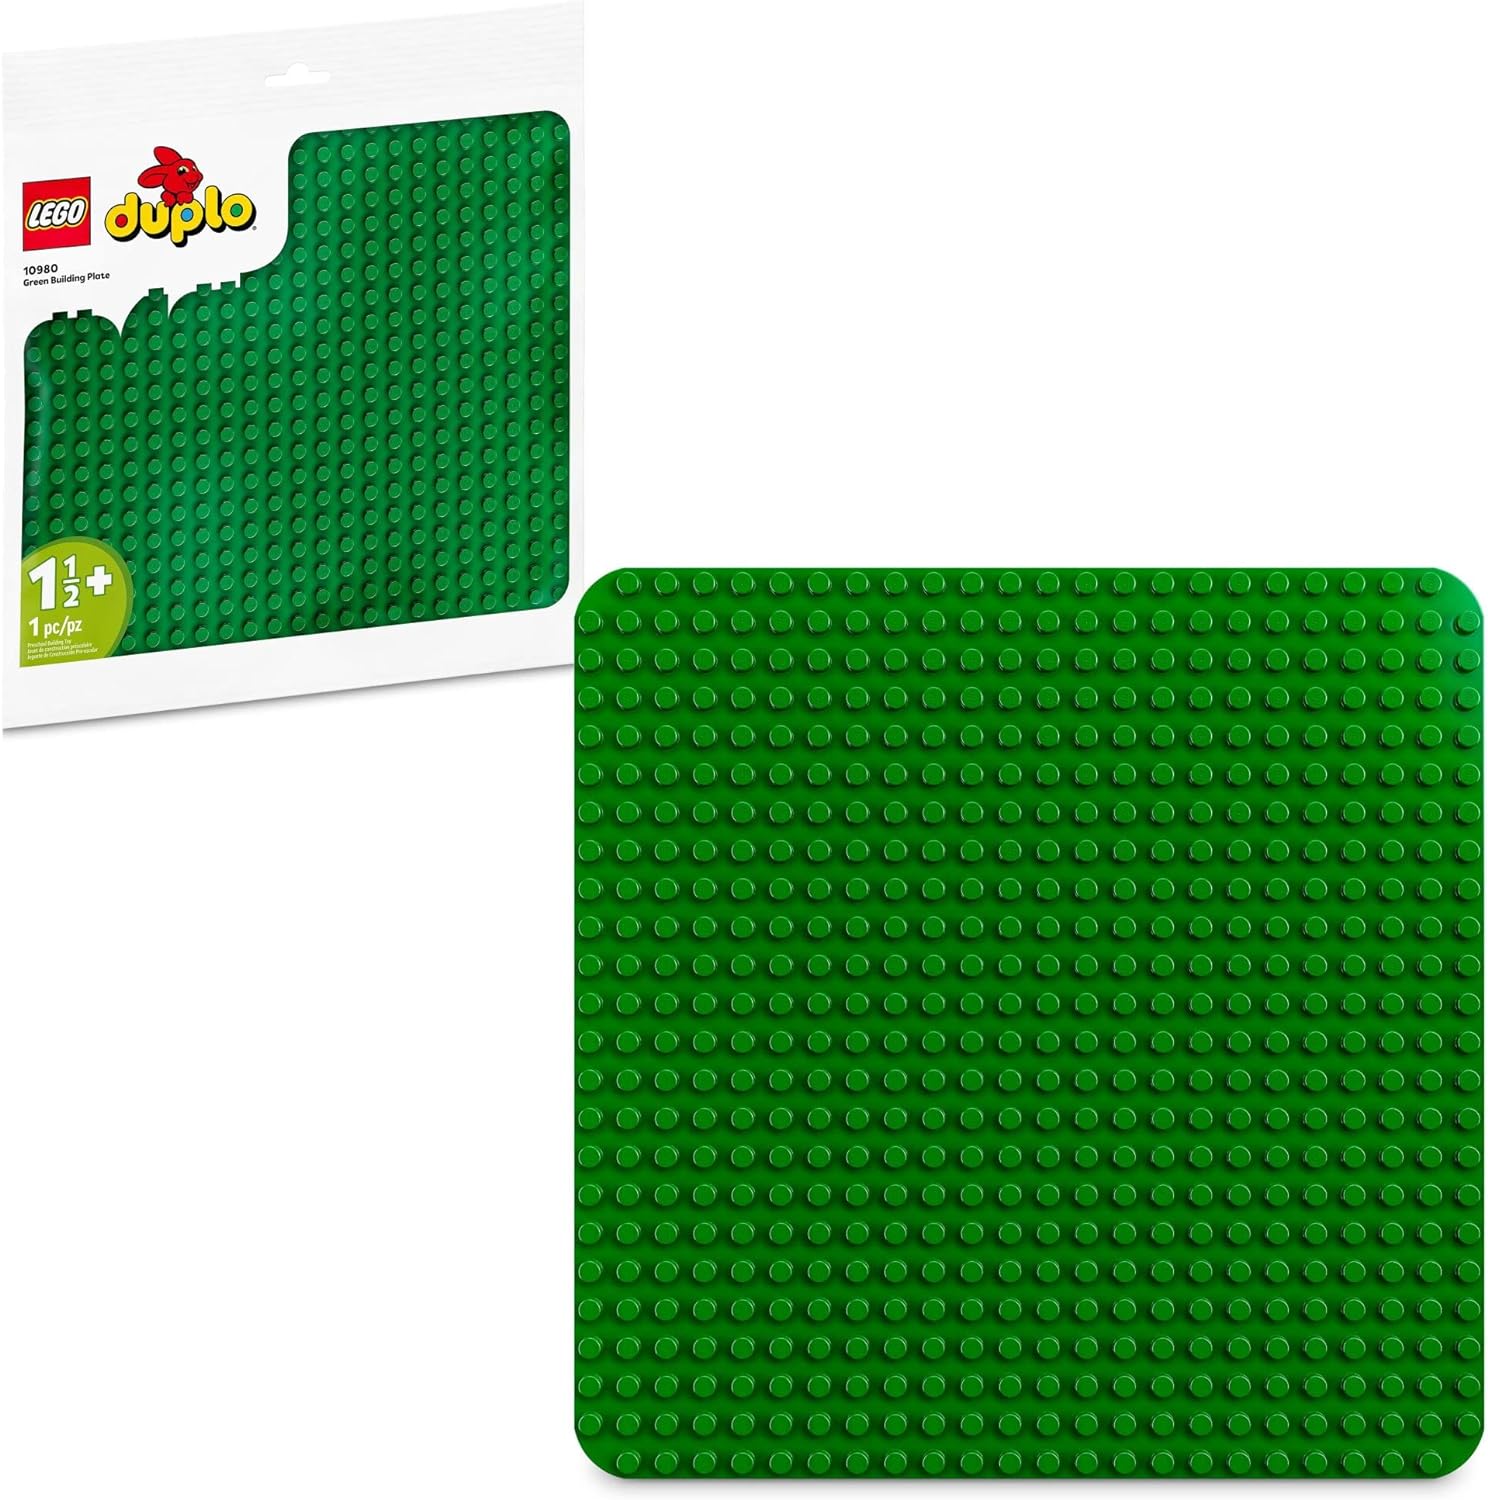 LEGO DUPLO Green Building Base Plate 10980 - $6.59 - Amazon